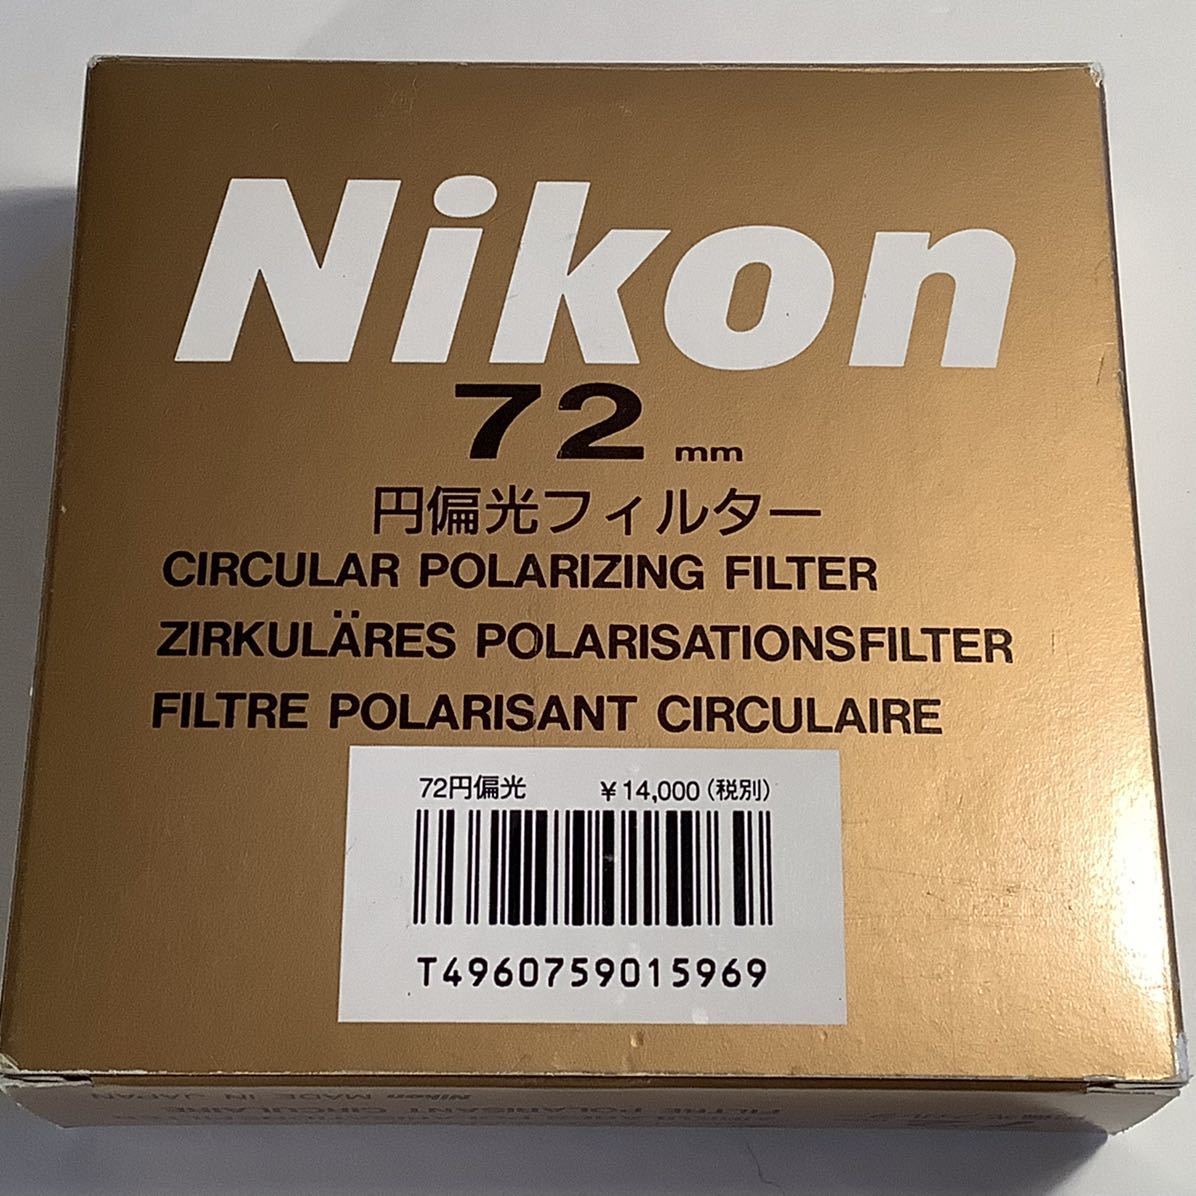 Nikon ニコン 72mm 円偏光フィルター 箱付き 今だけスーパーセール限定